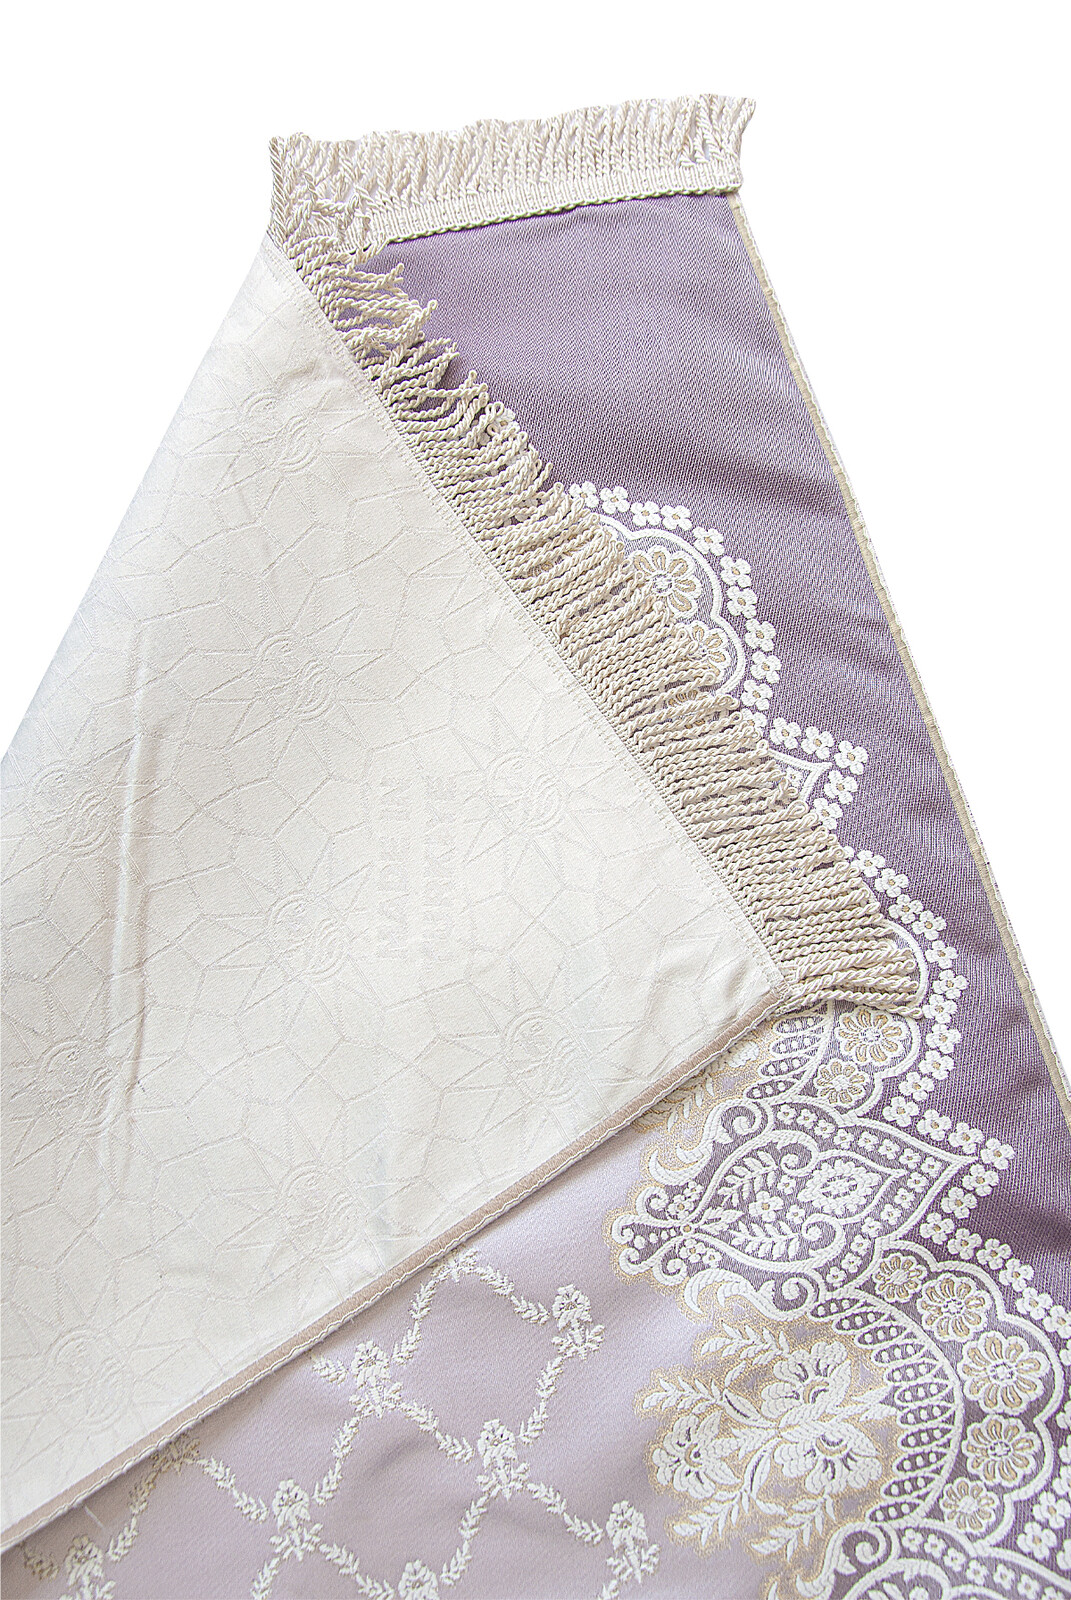 Luxury Patterned Lined Prayer Rug Purple - Thumbnail